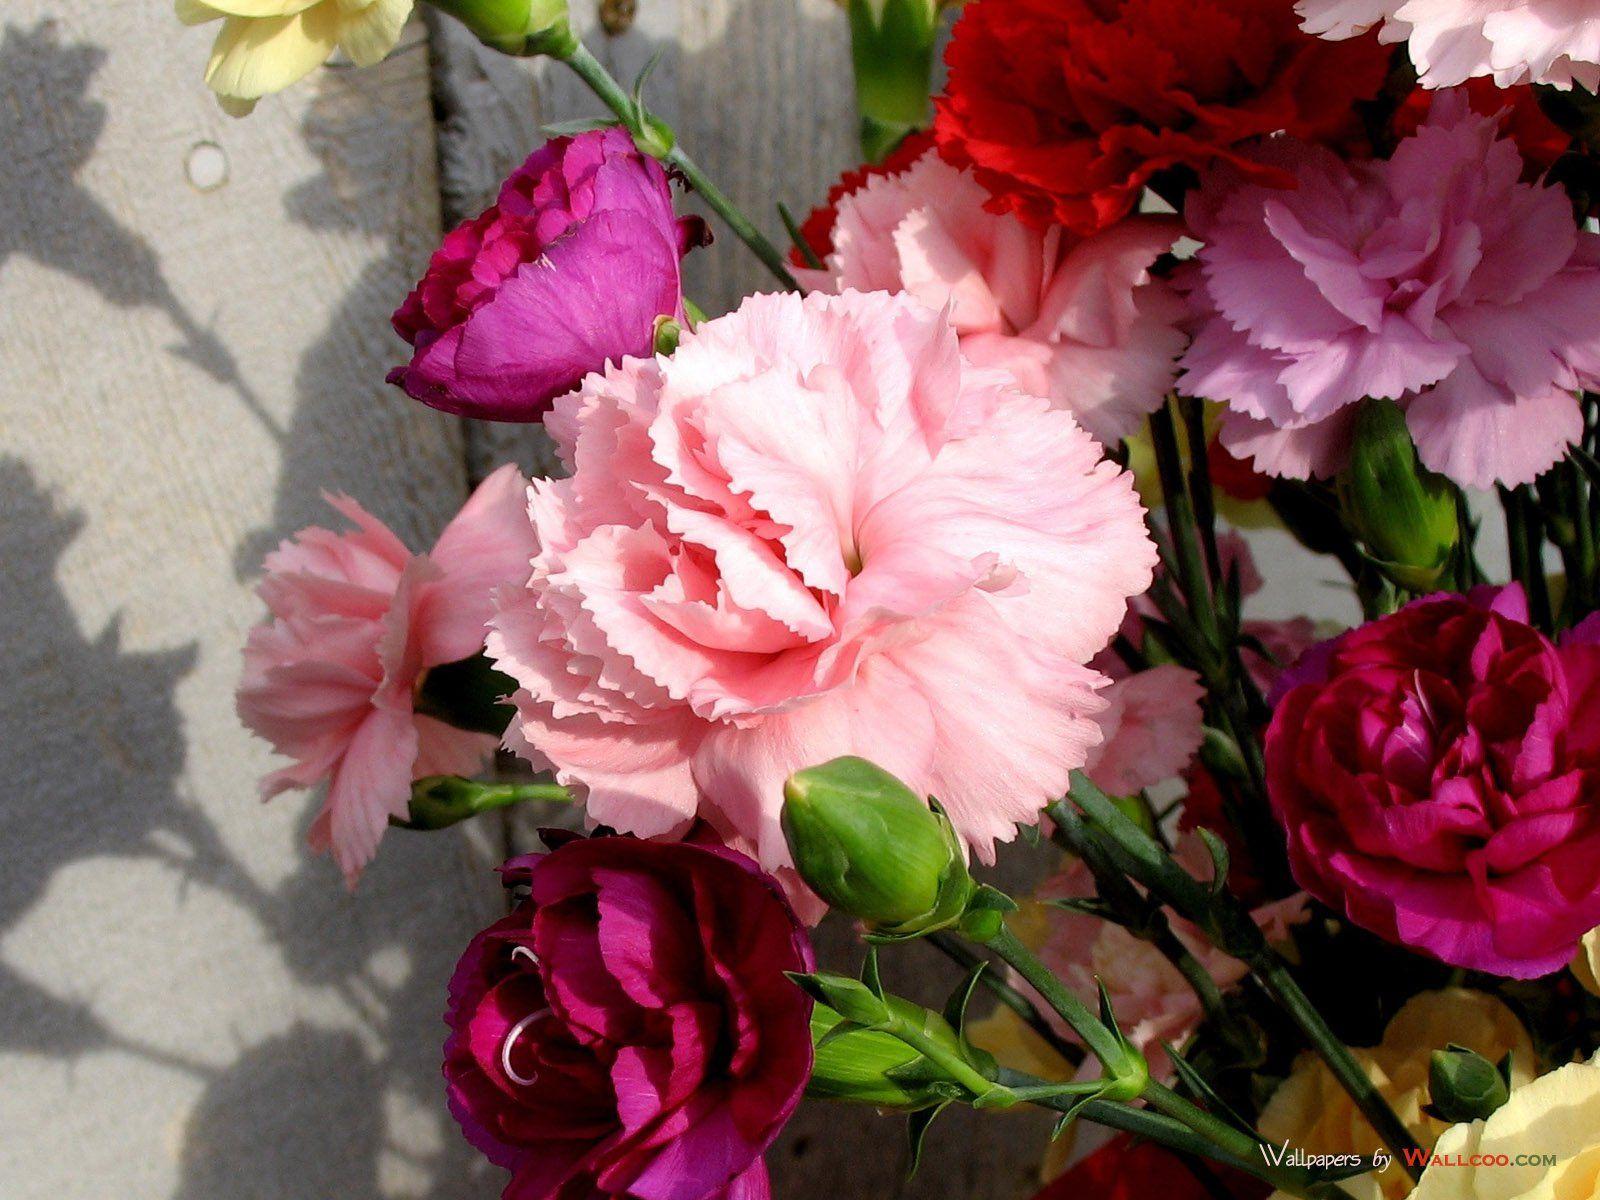 Carnation Flower Wallpapers Top Free Carnation Flower Backgrounds Wallpaperaccess